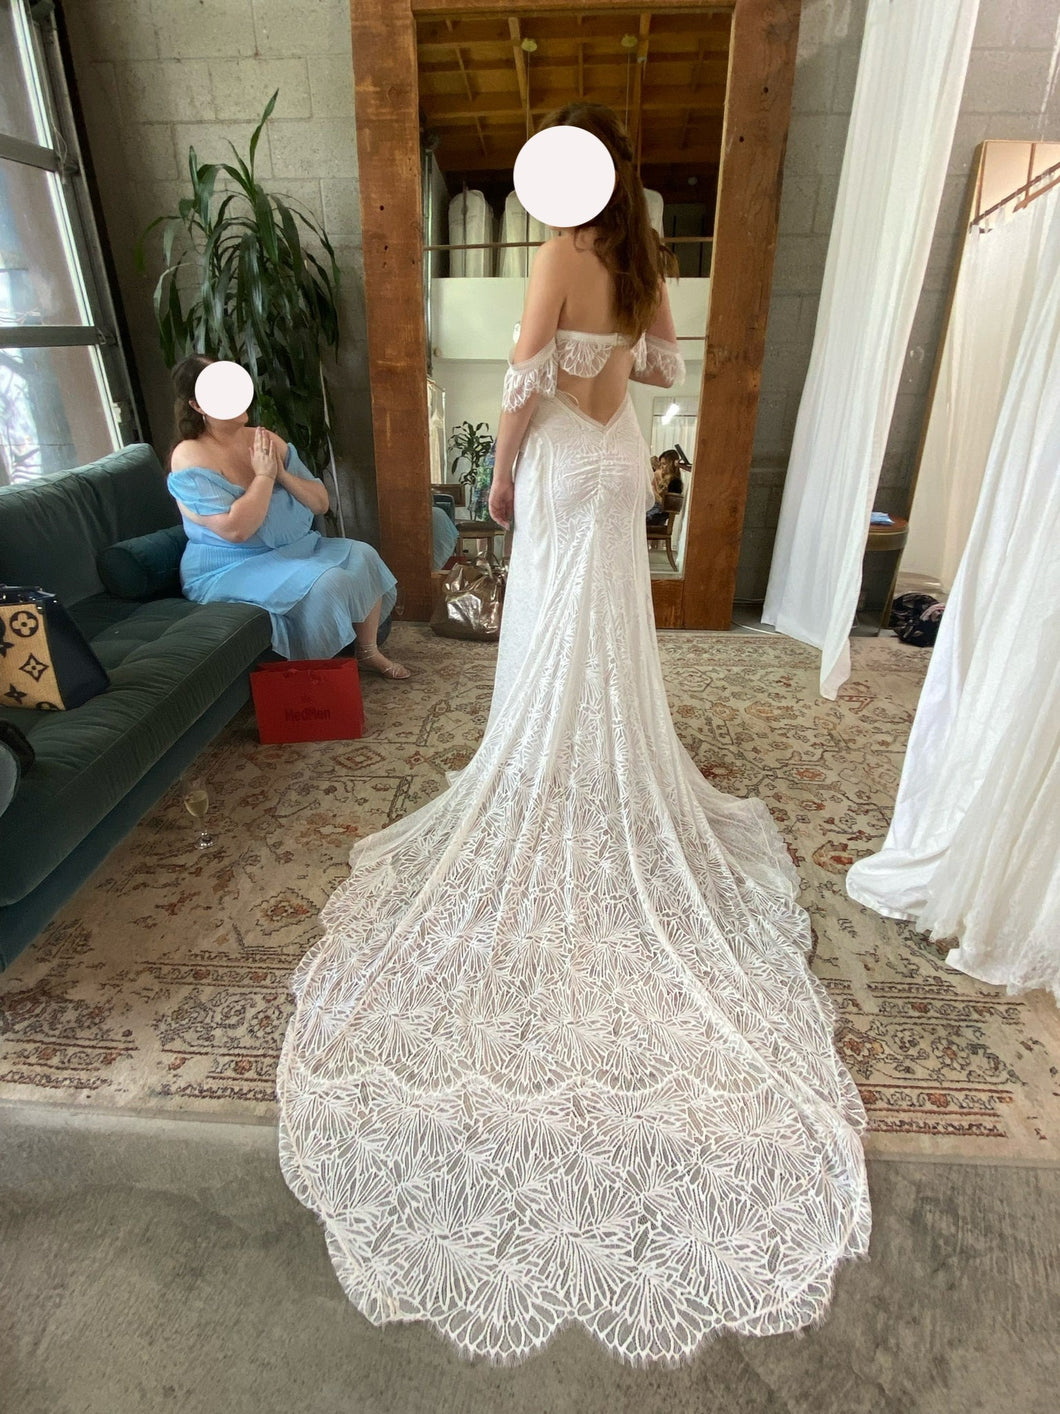 Grace Loves Lace 'Noah' wedding dress size-02 NEW